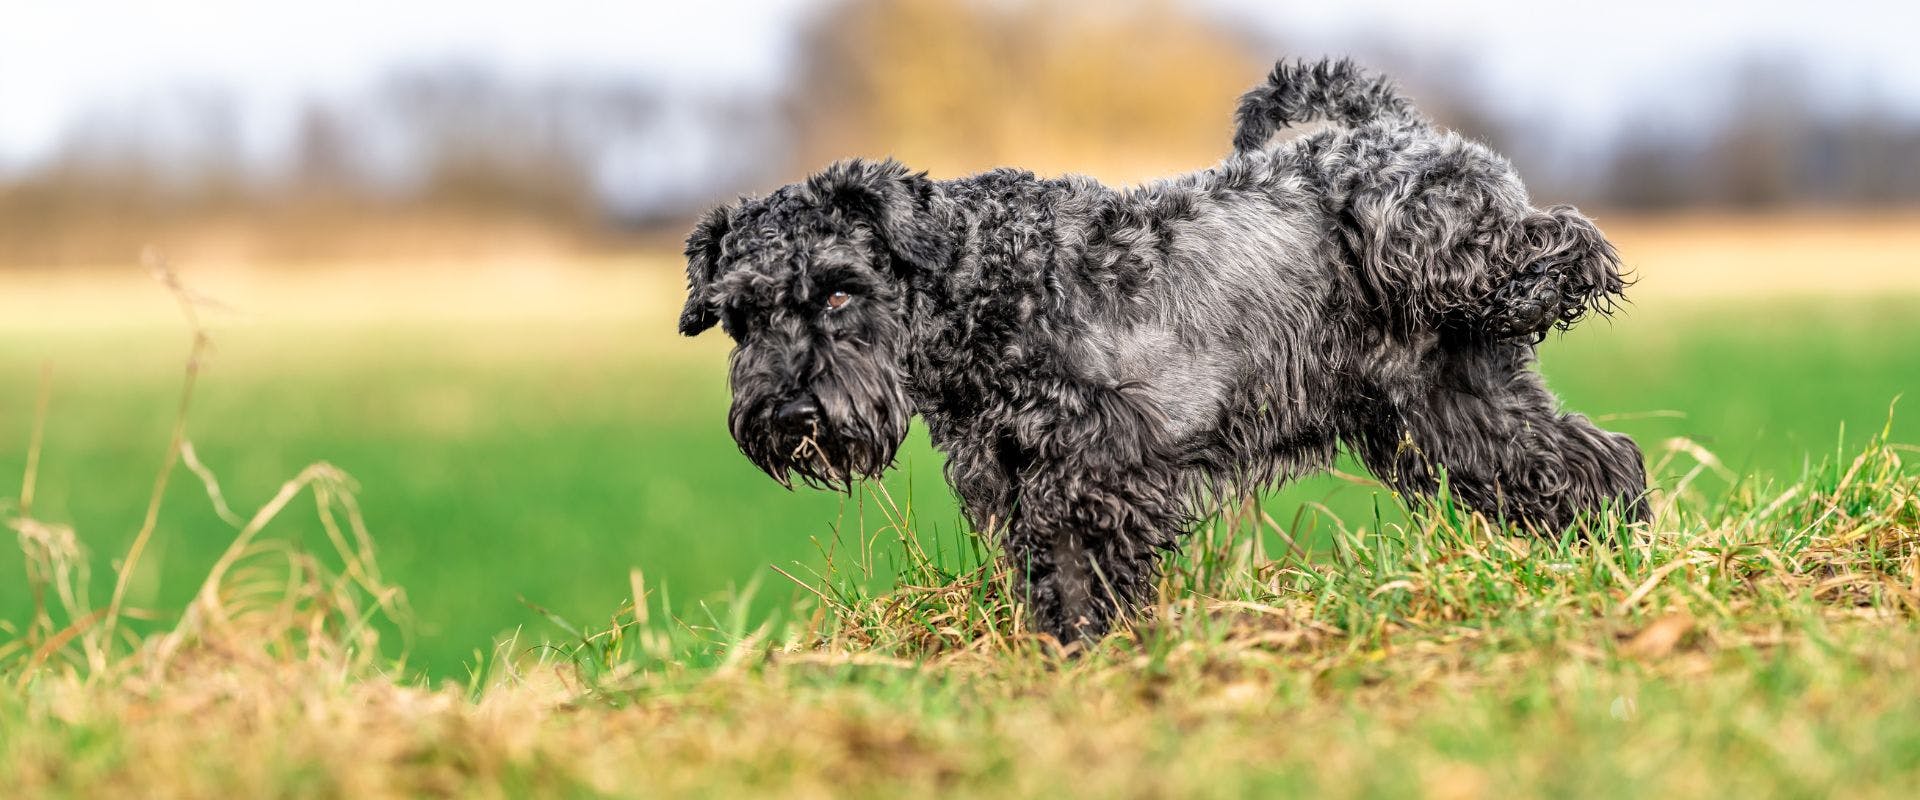 Black dog peeing on grass